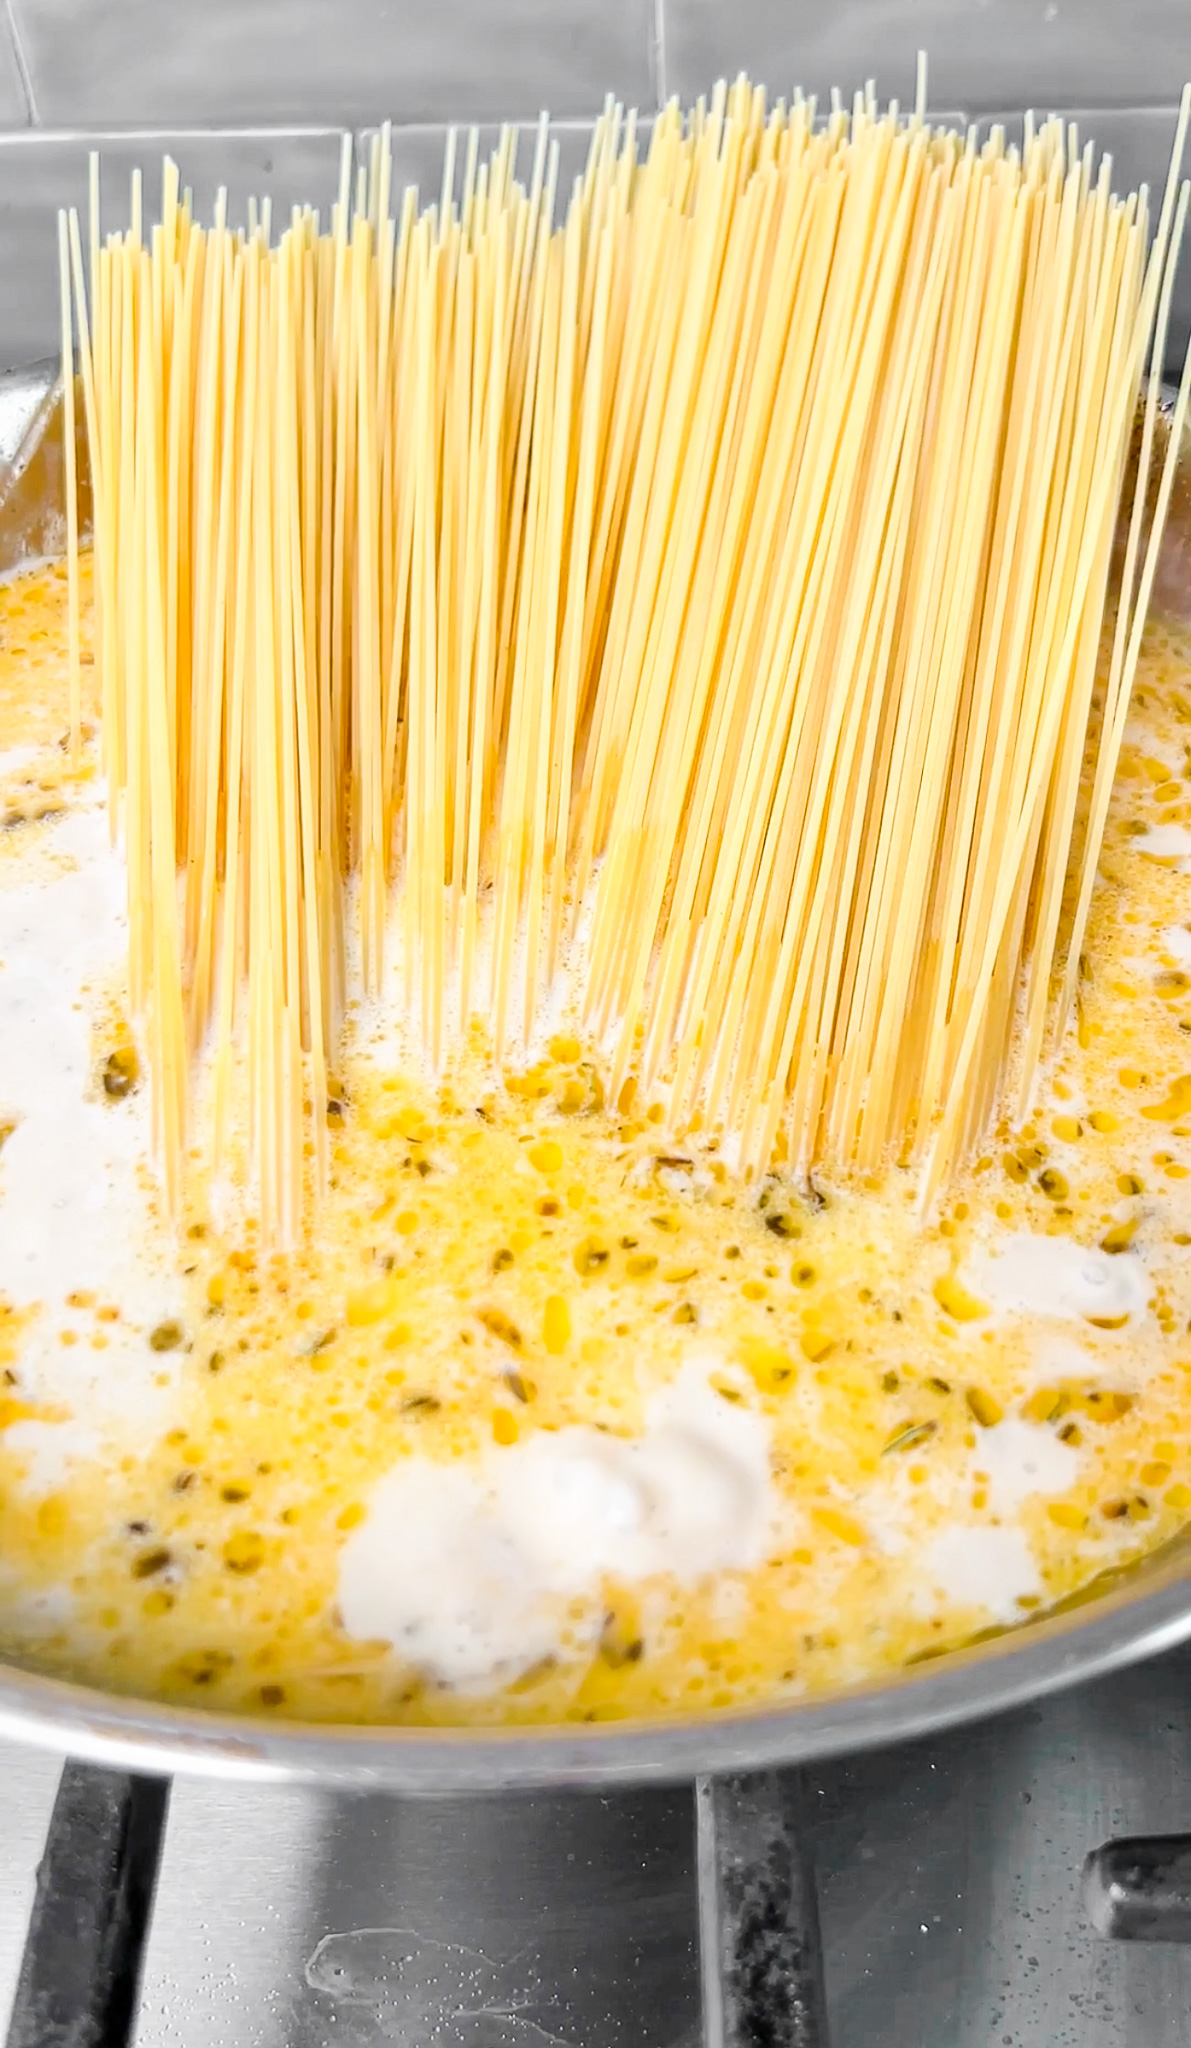 lemon parmesan one-pan pasta